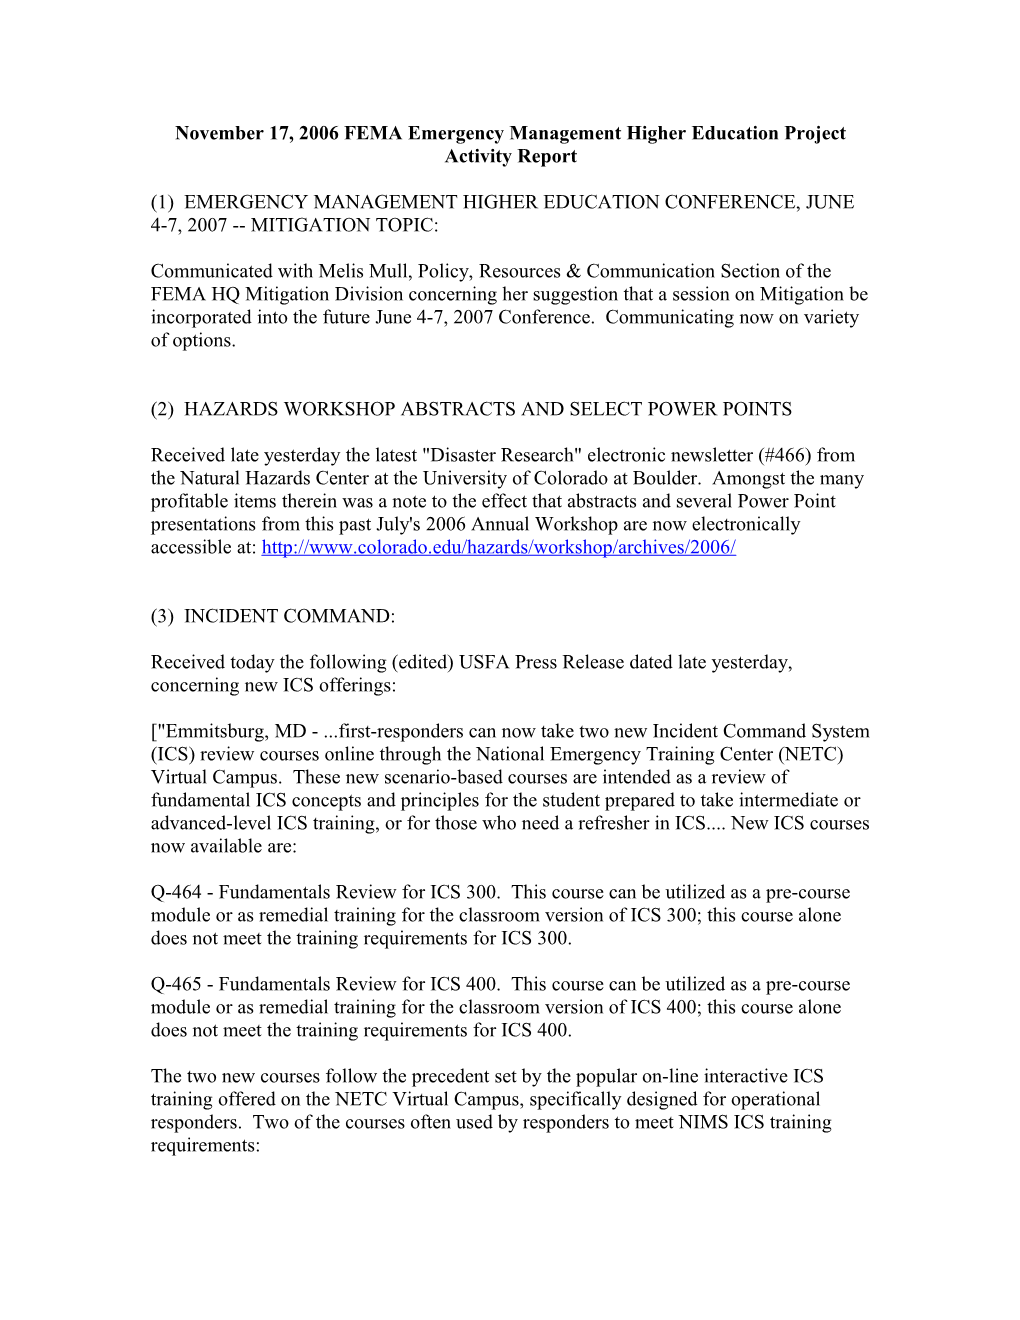 November 17, 2006 FEMA Emergency Management Higher Education Project Activity Report